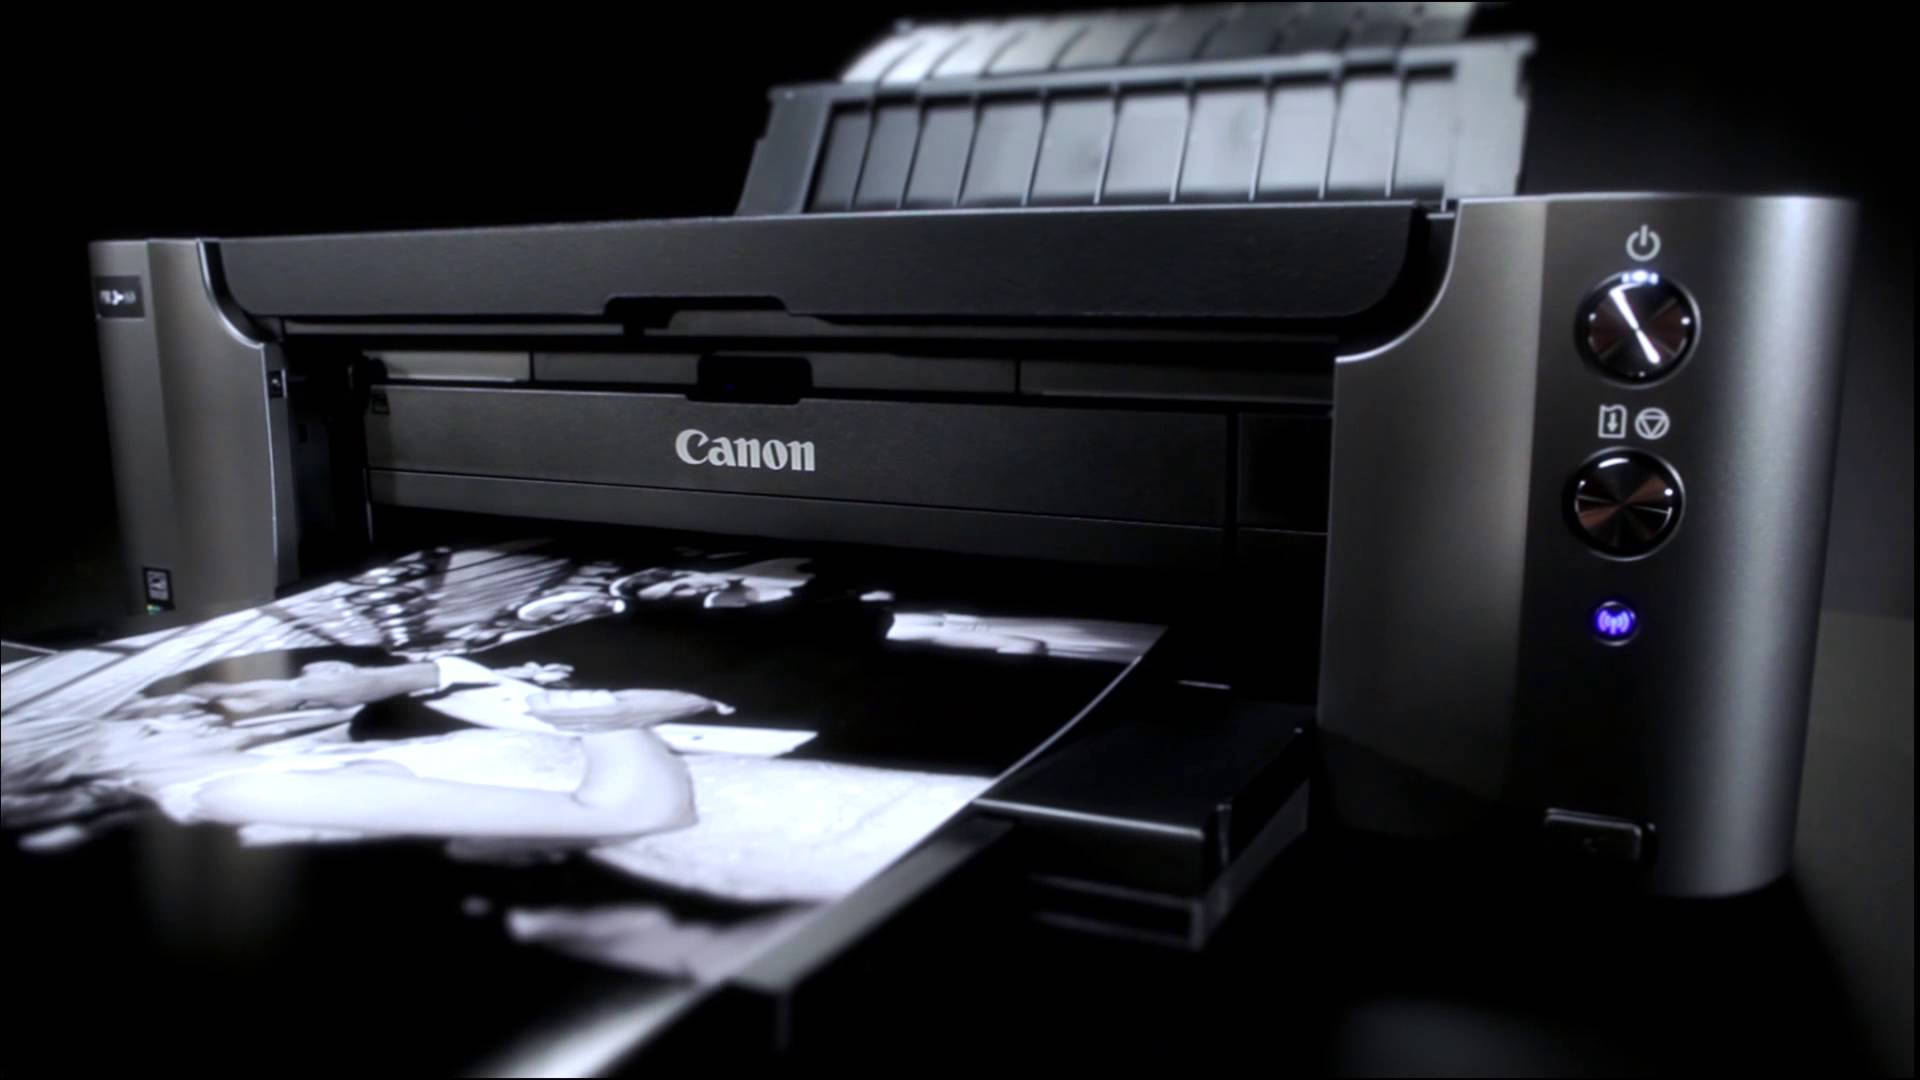 Impressoracanon Imprimindo Imagem Papel de Parede